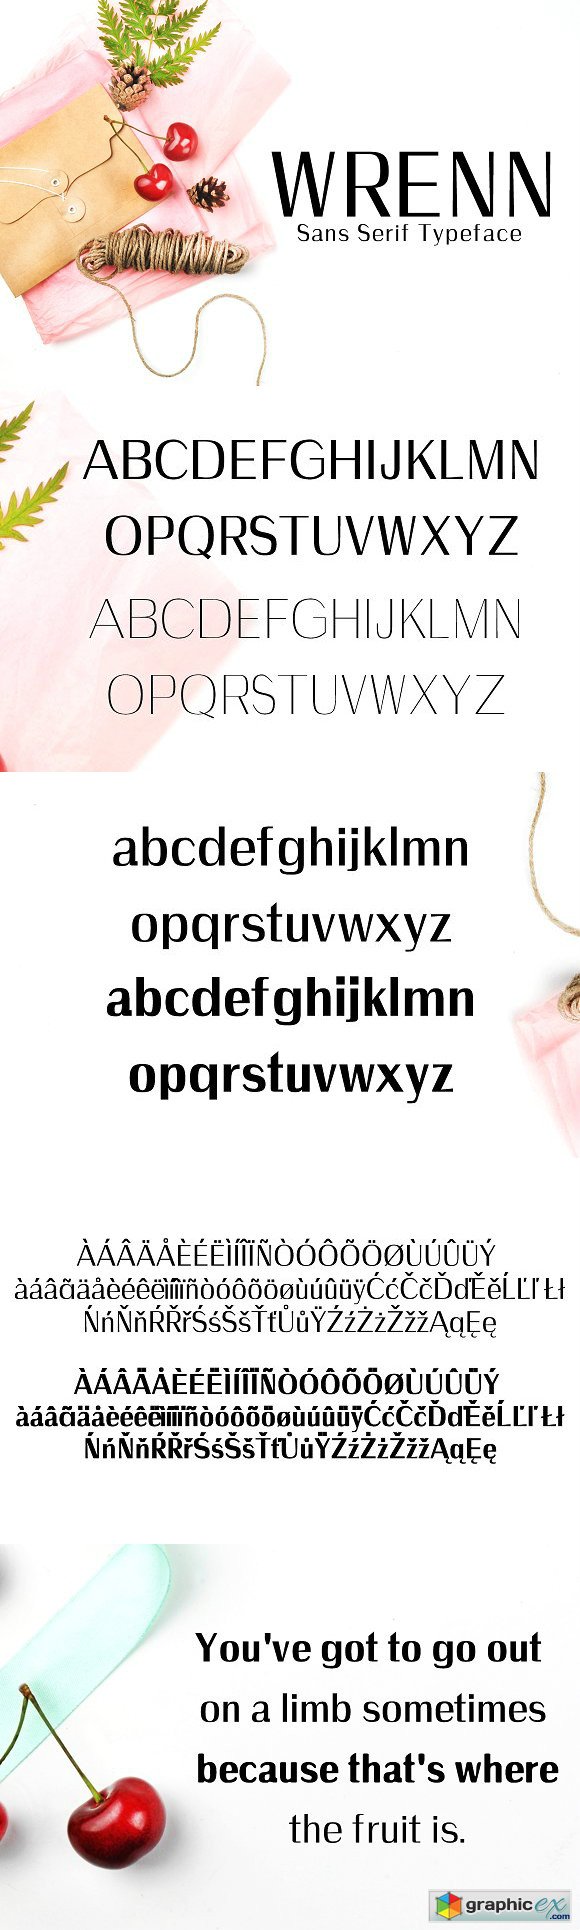 Wrenn Sans Serif Typeface